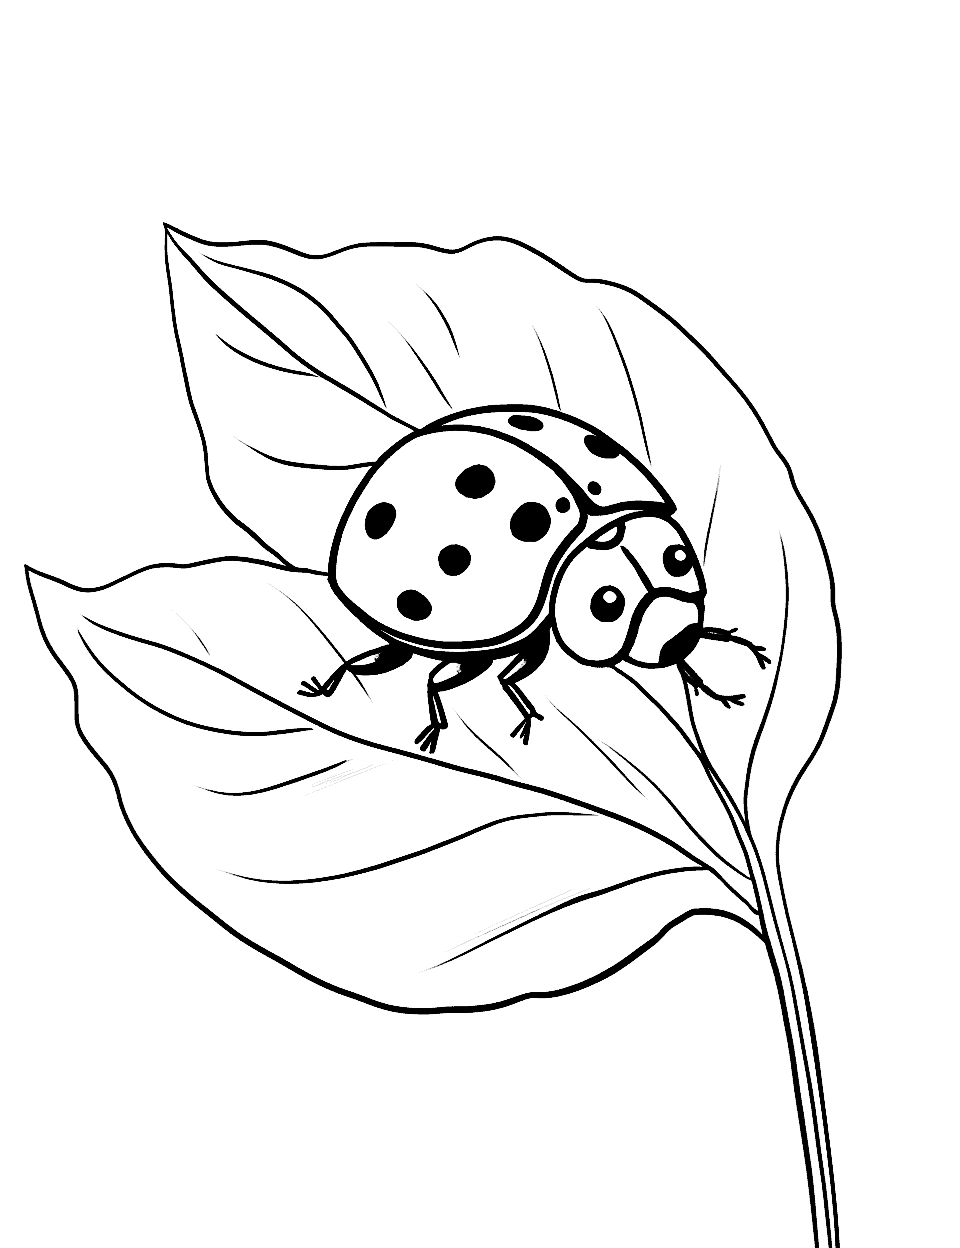 Ladybug on a Leaf Coloring Page - A ladybug’s cautious steps on a new leaf.